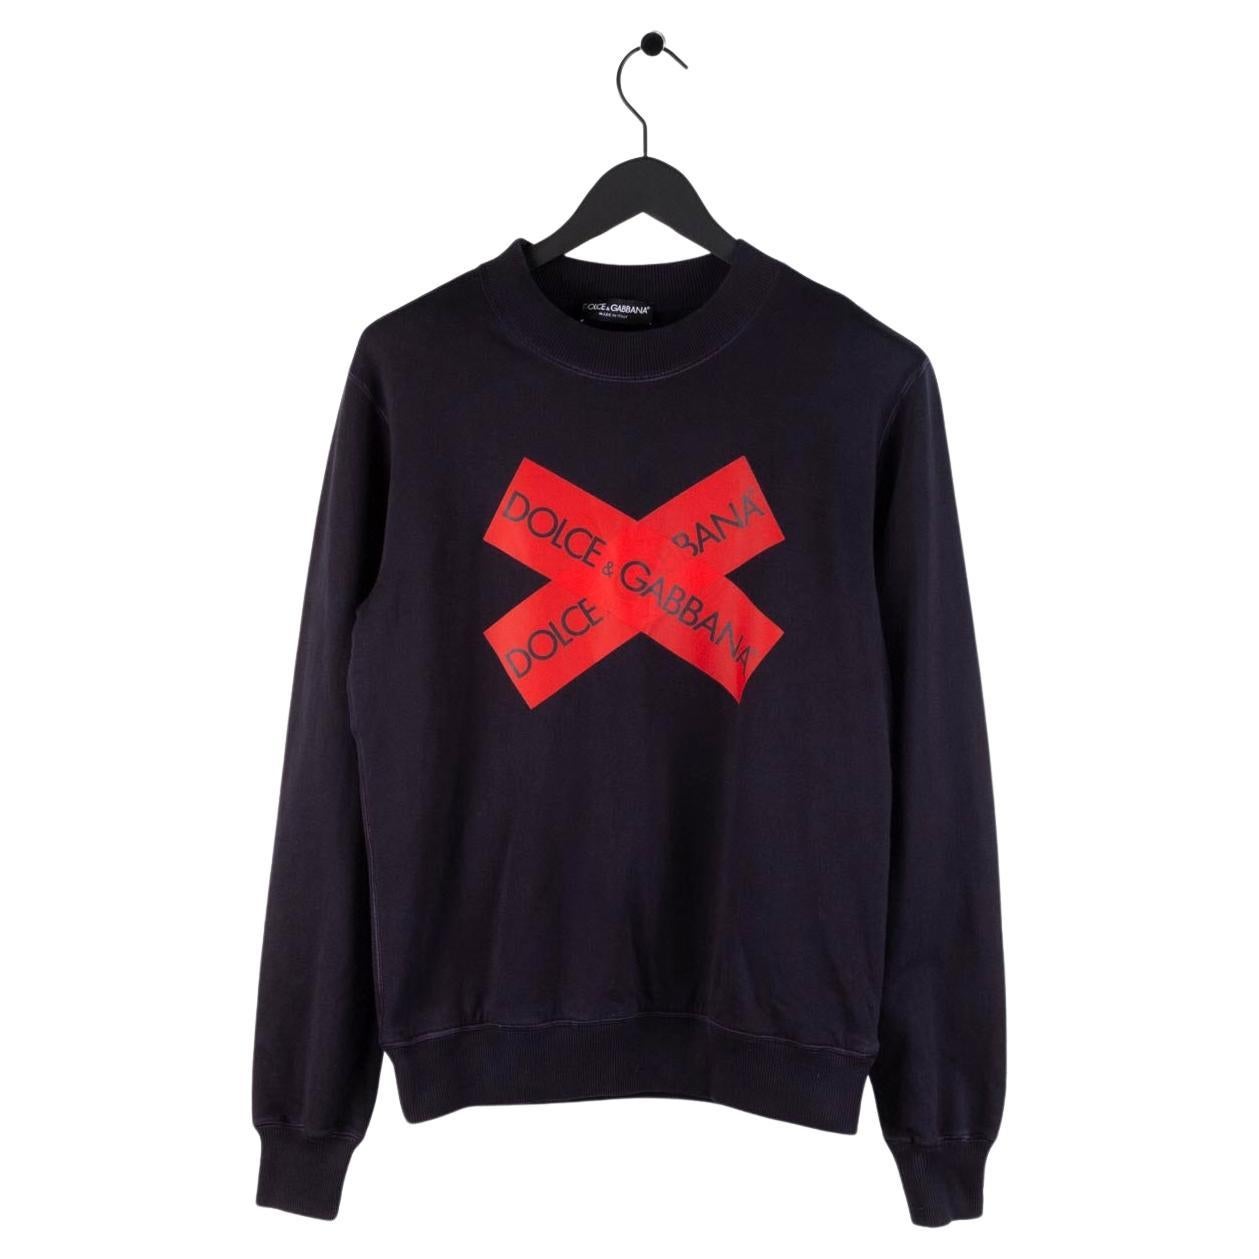 New Dolce&Gabbana Men Sweatshirt Jumper Pullover Red Cross, Size 46IT (S/M) S444 For Sale